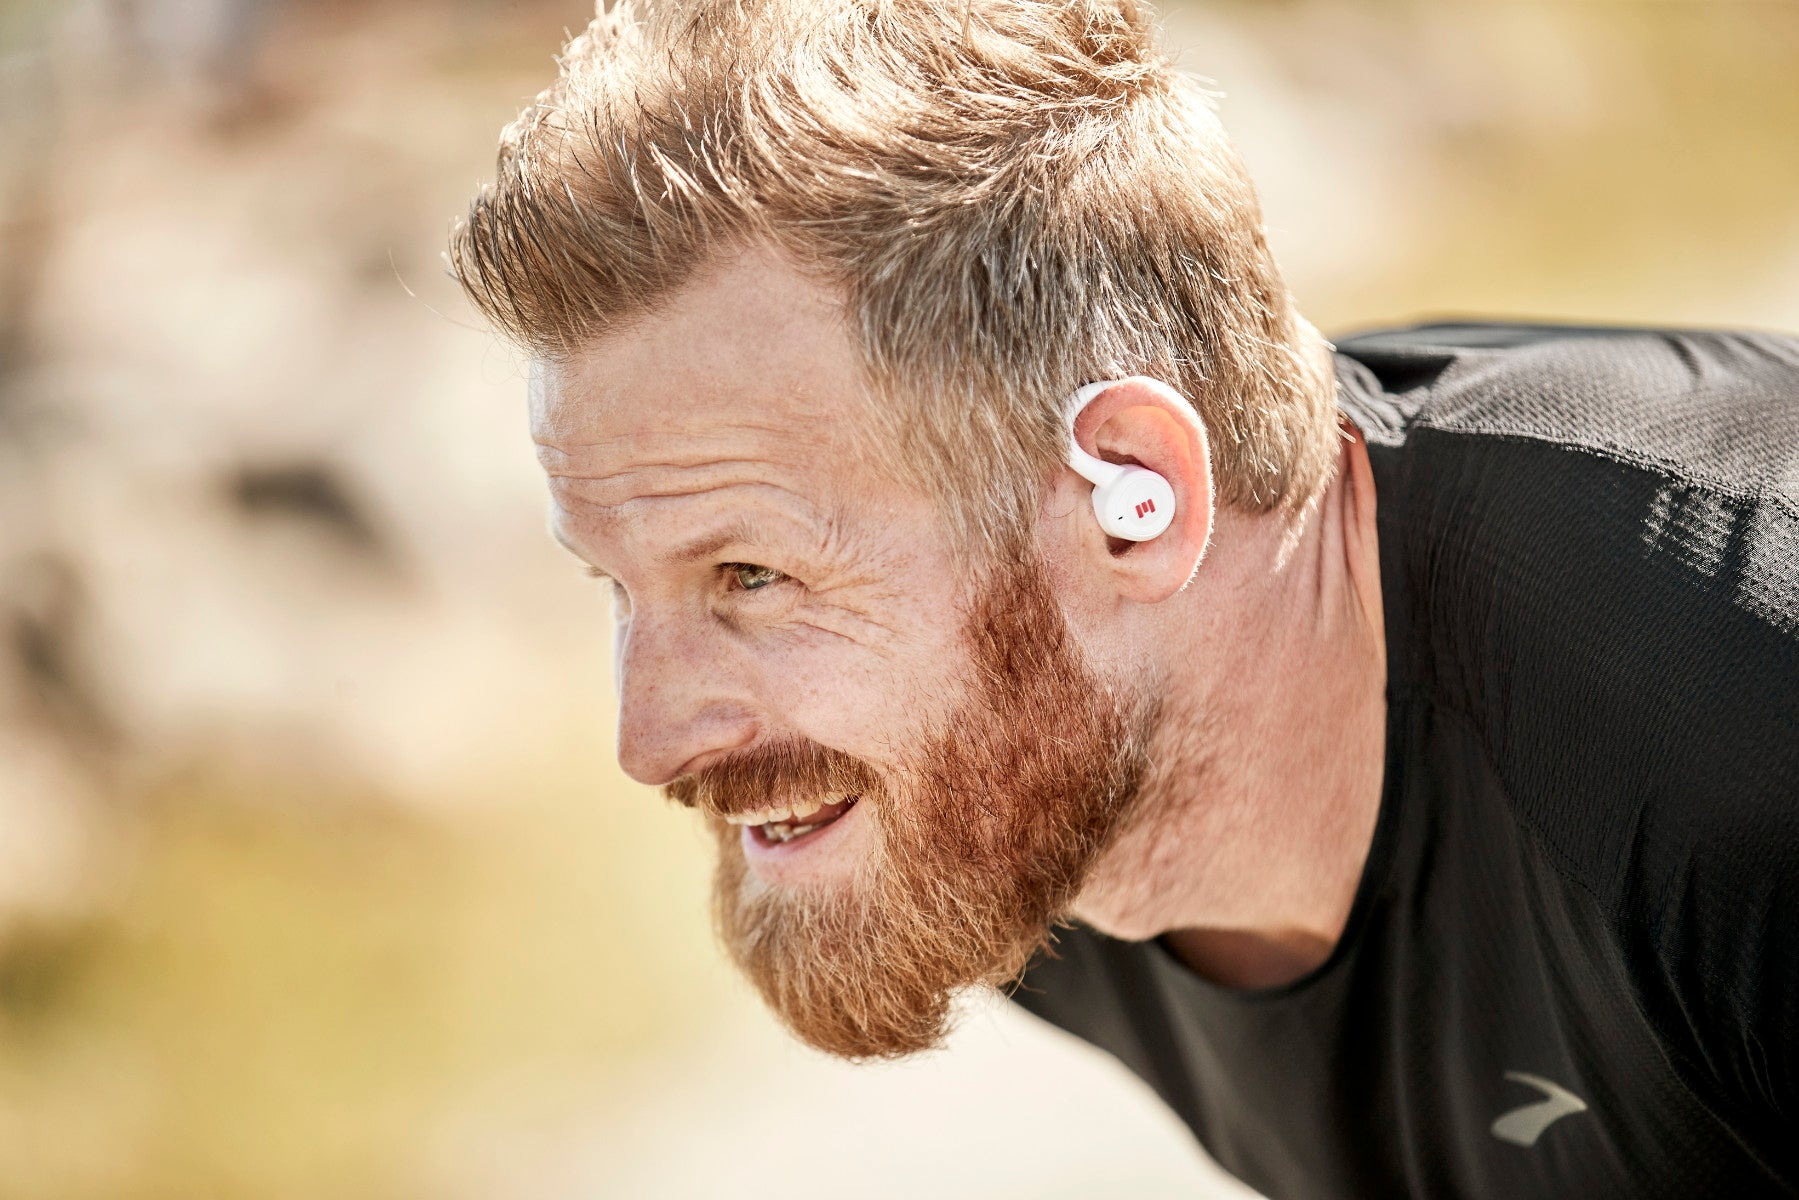 Kopfhörer ACTION MiiBUDS White Arctic In-Ear Bluetooth II, MIIEGO In-ear